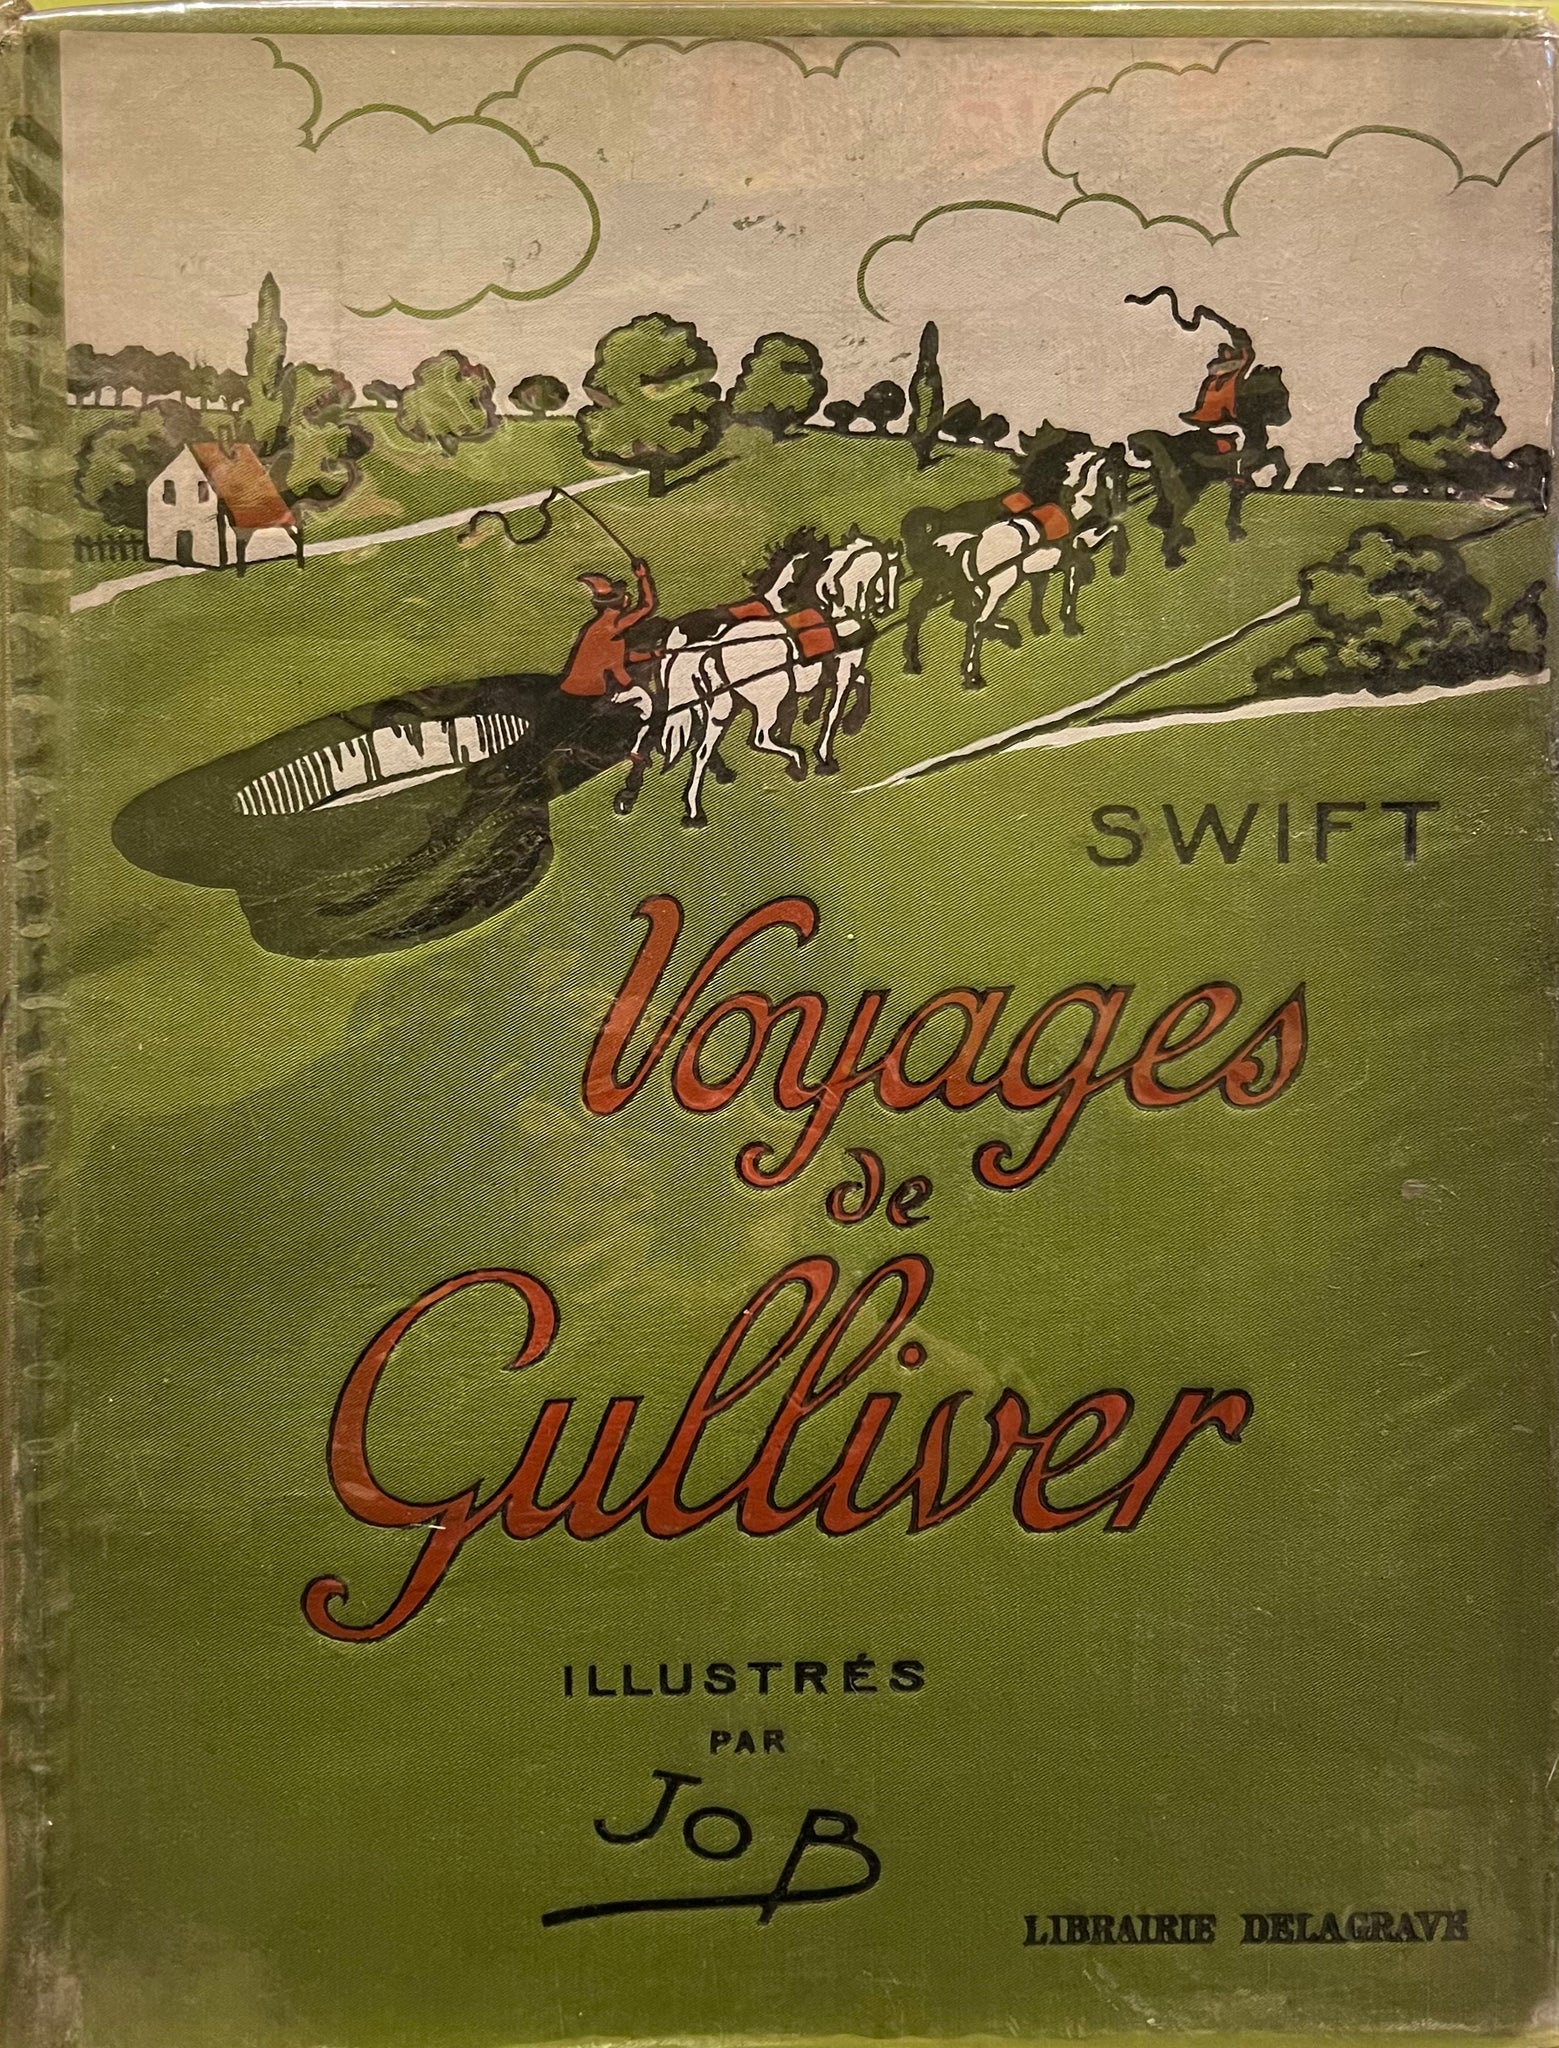 Voyages de Gulliver, Jonathan Swift, Illustrations by JOB